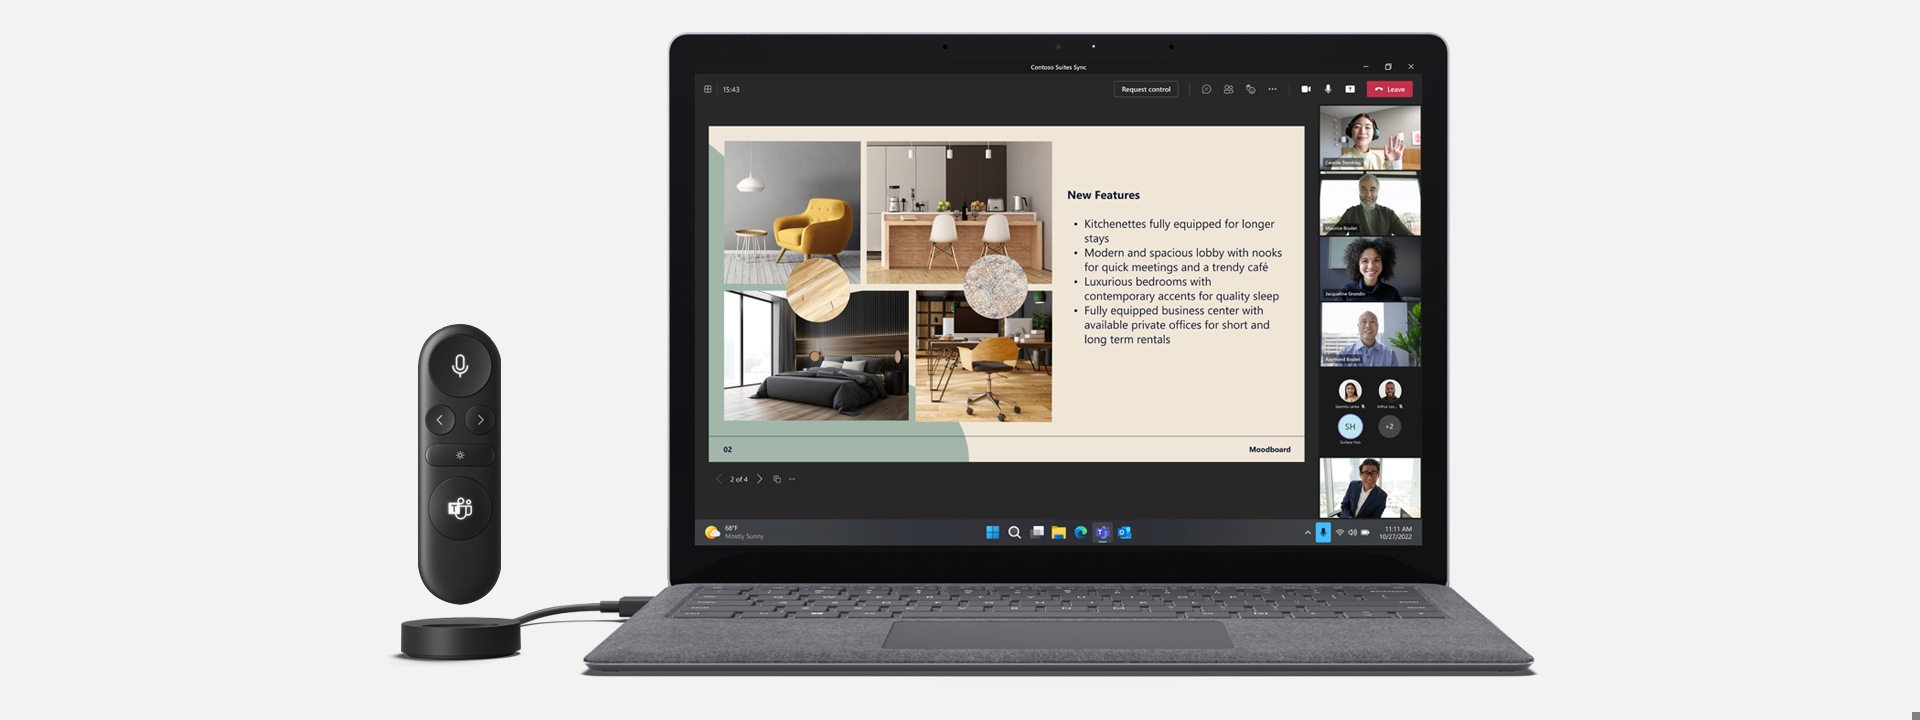 Microsoft Presenter Plus 放在 Surface 设备旁边，设备屏幕上显示 Microsoft Teams 通话